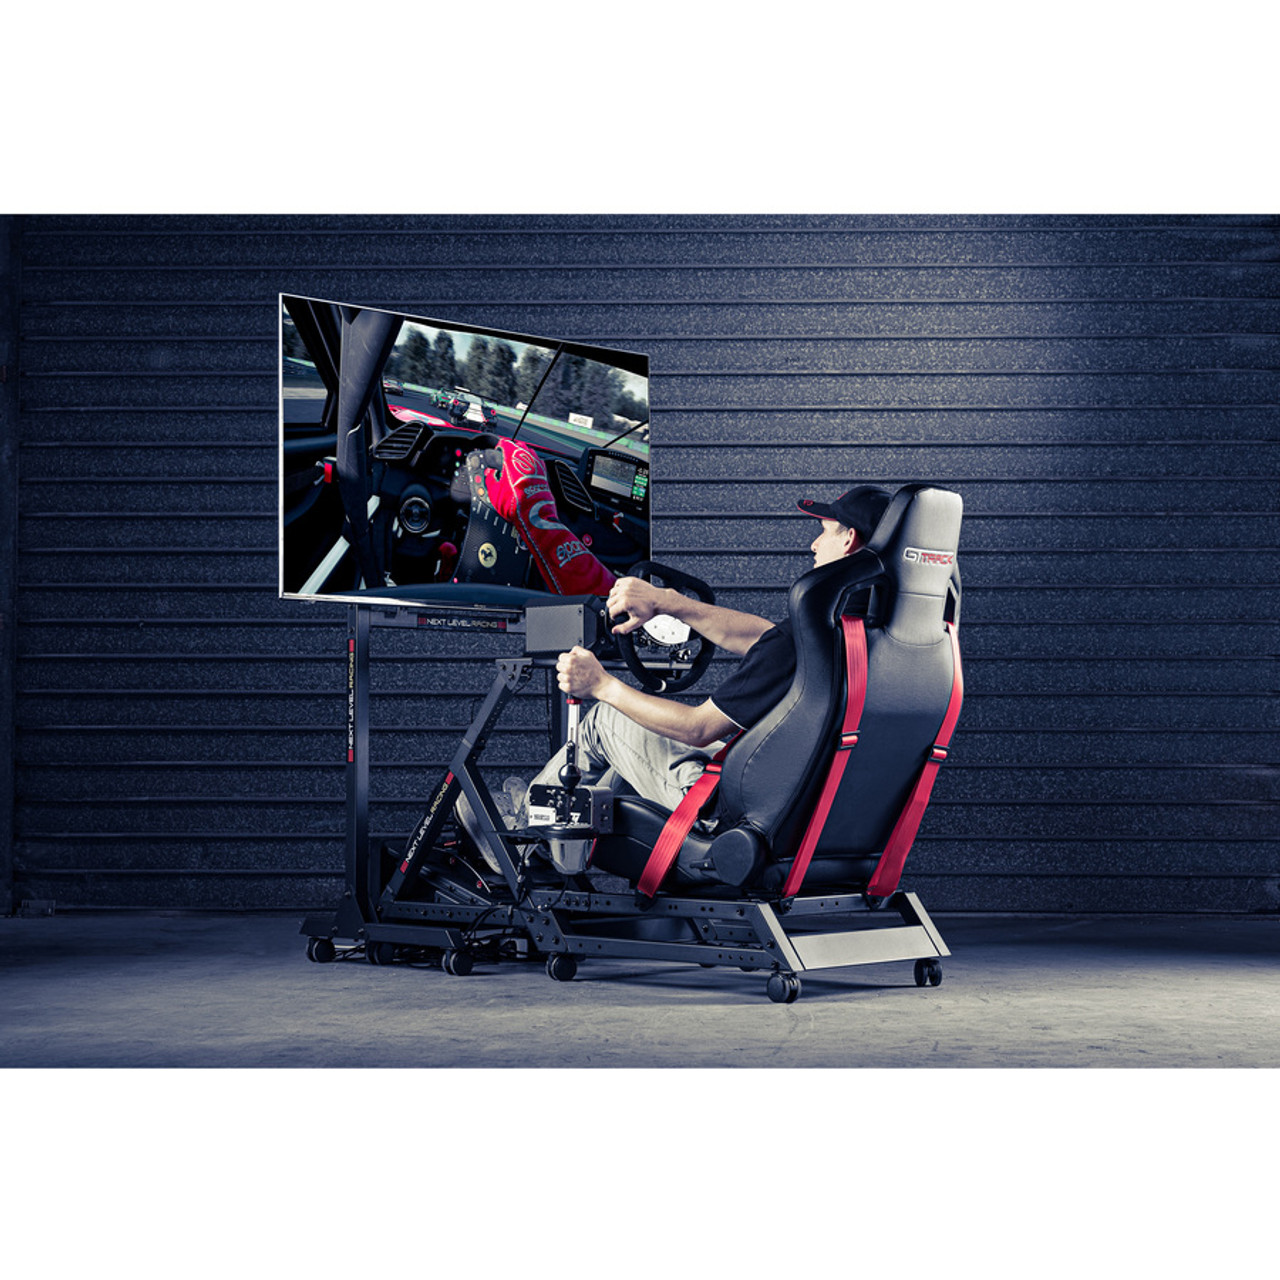 Next Level Racing GTTrack Simulator Cockpit (NLR-S009)